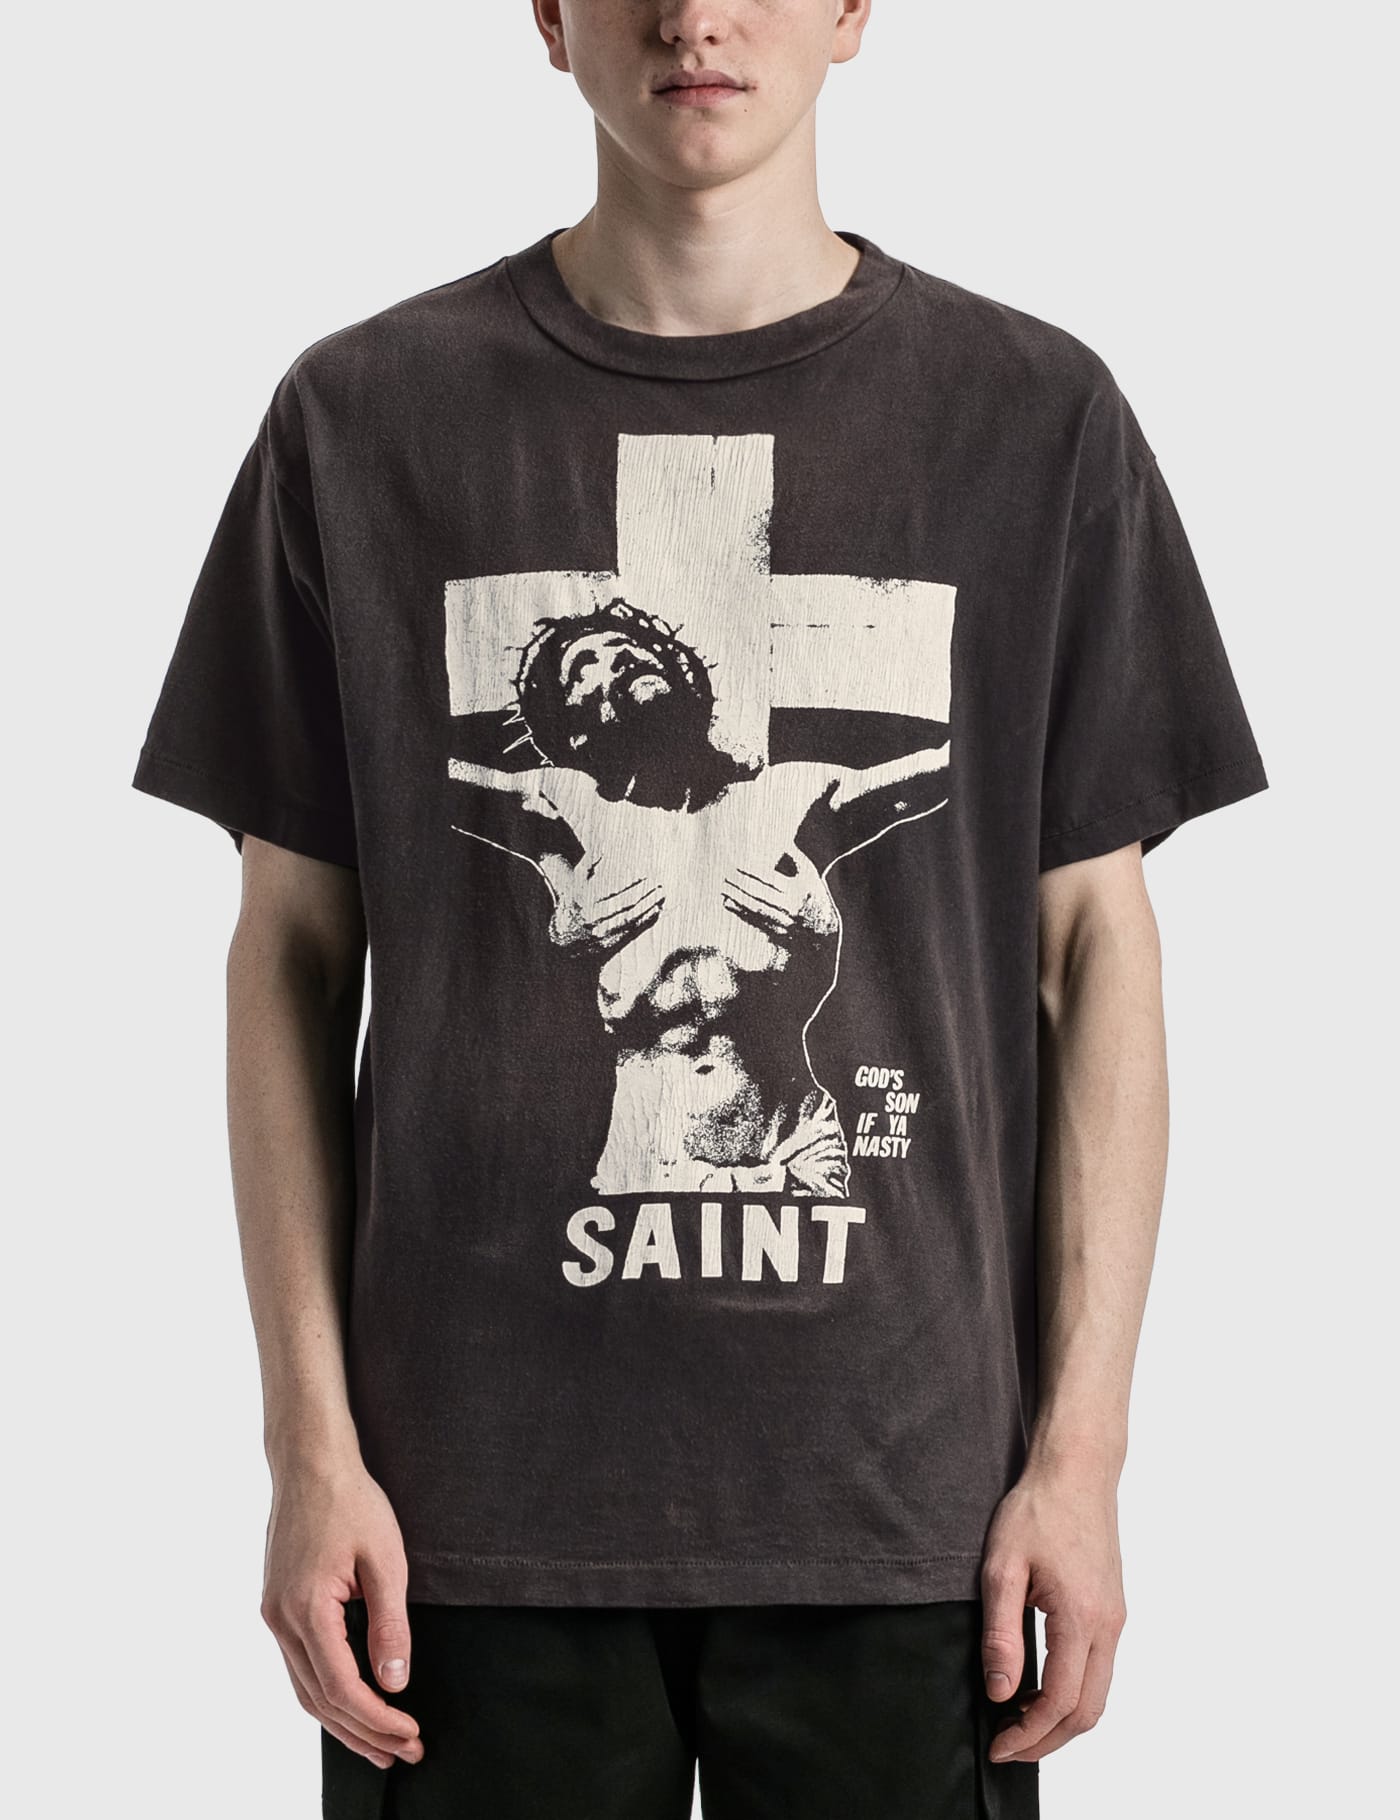 Saint Michael - Saint T-shirt | HBX - HYPEBEAST 為您搜羅全球潮流 